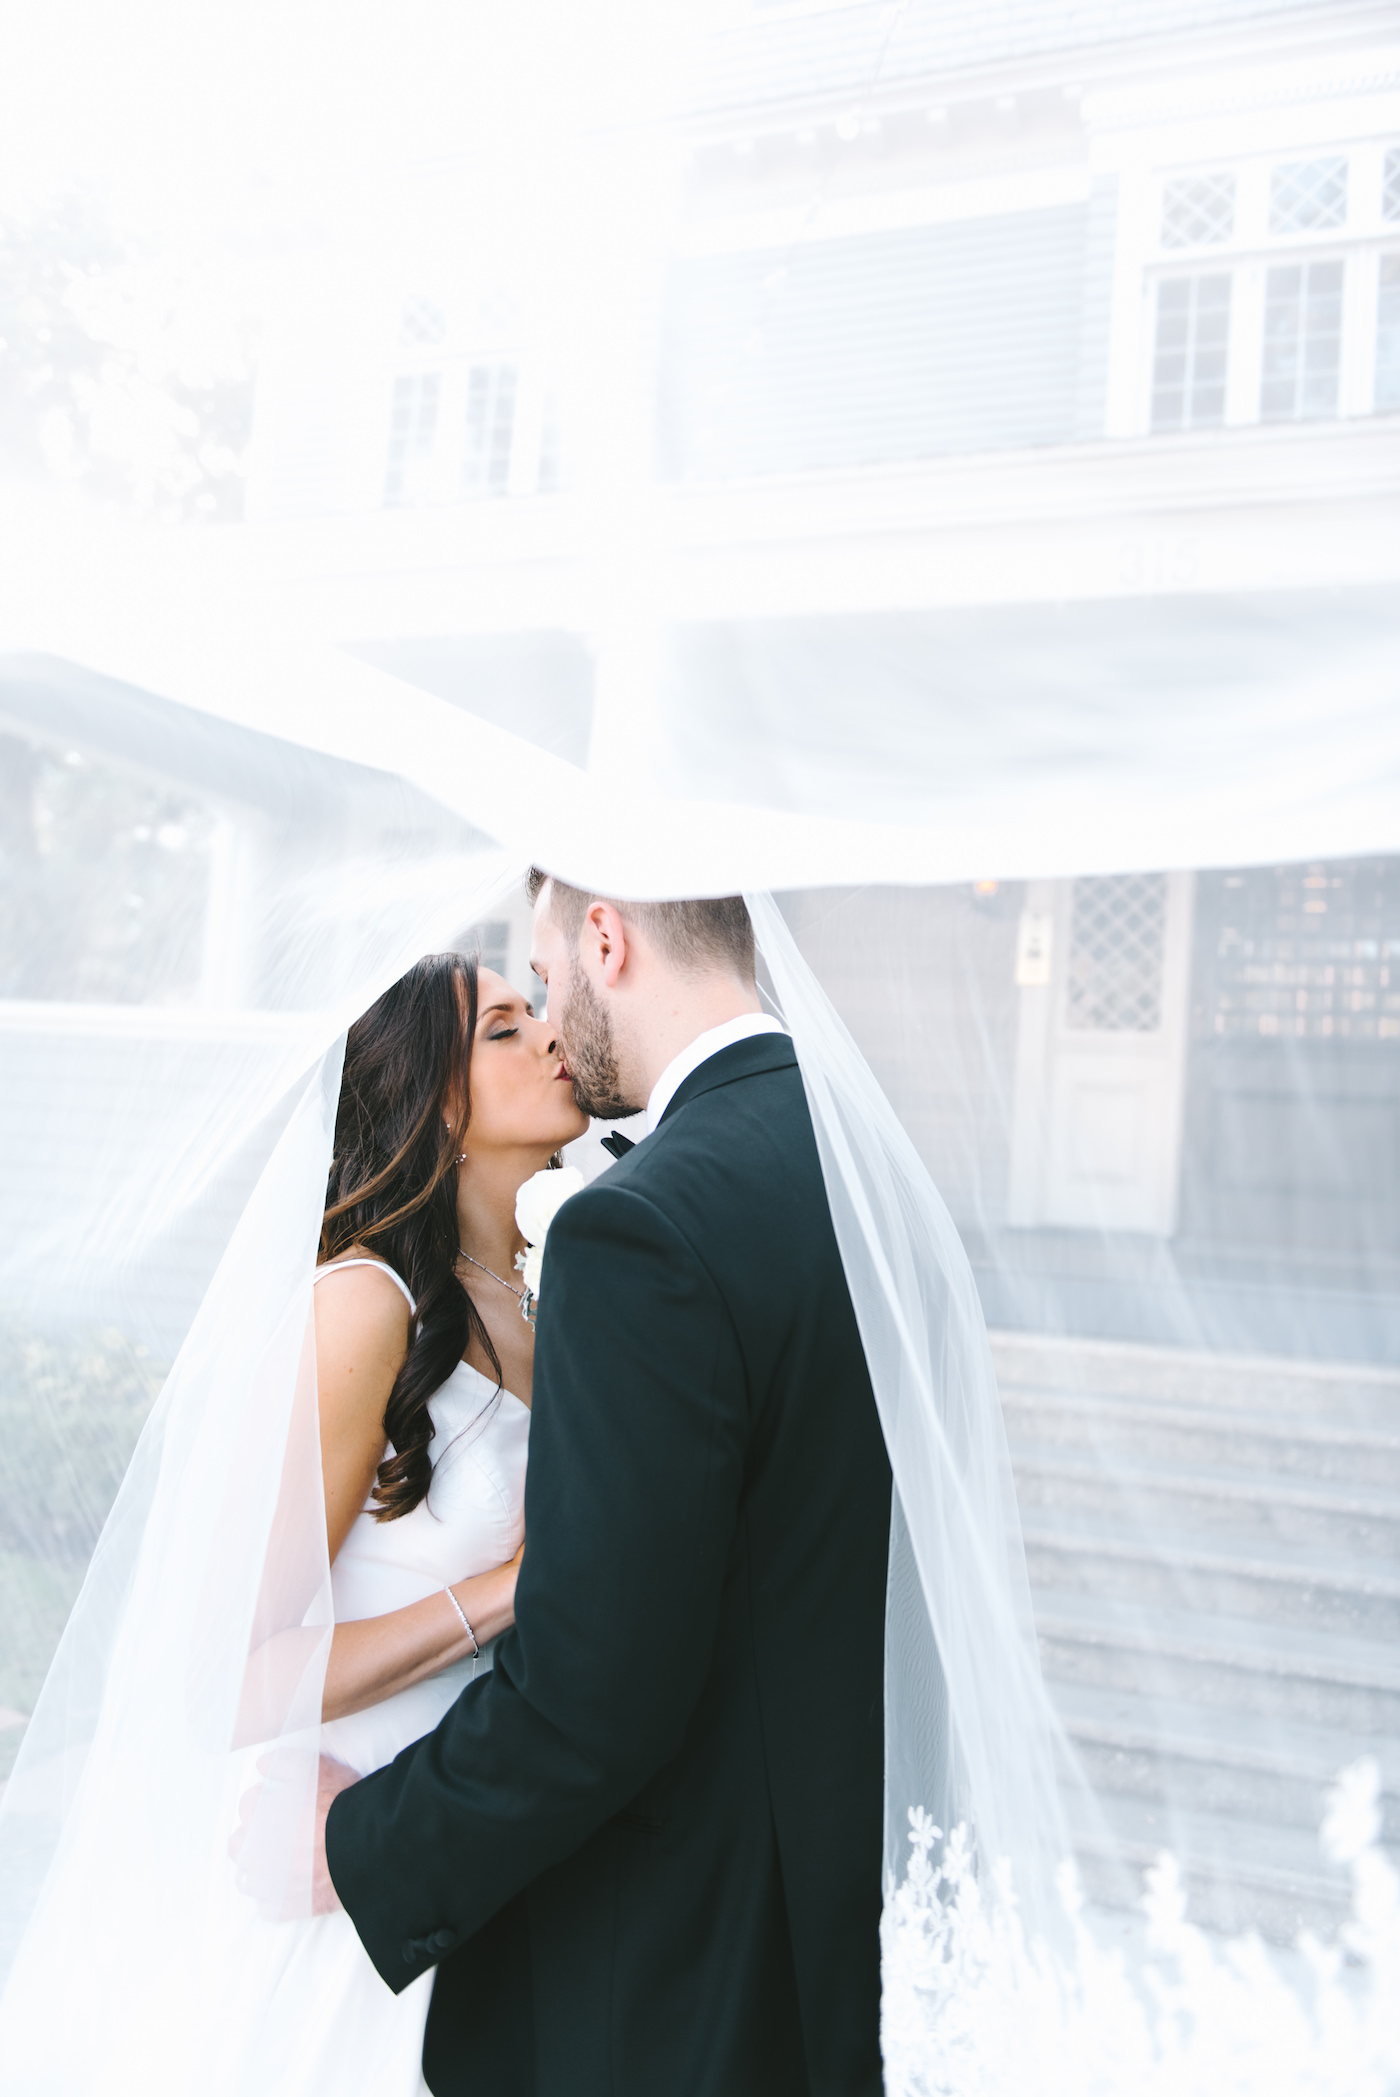 Romantic Bride and Groom Creative Wedding Portrait Under Bride Veil | Tampa Bay Wedding Photographer Kera Photography